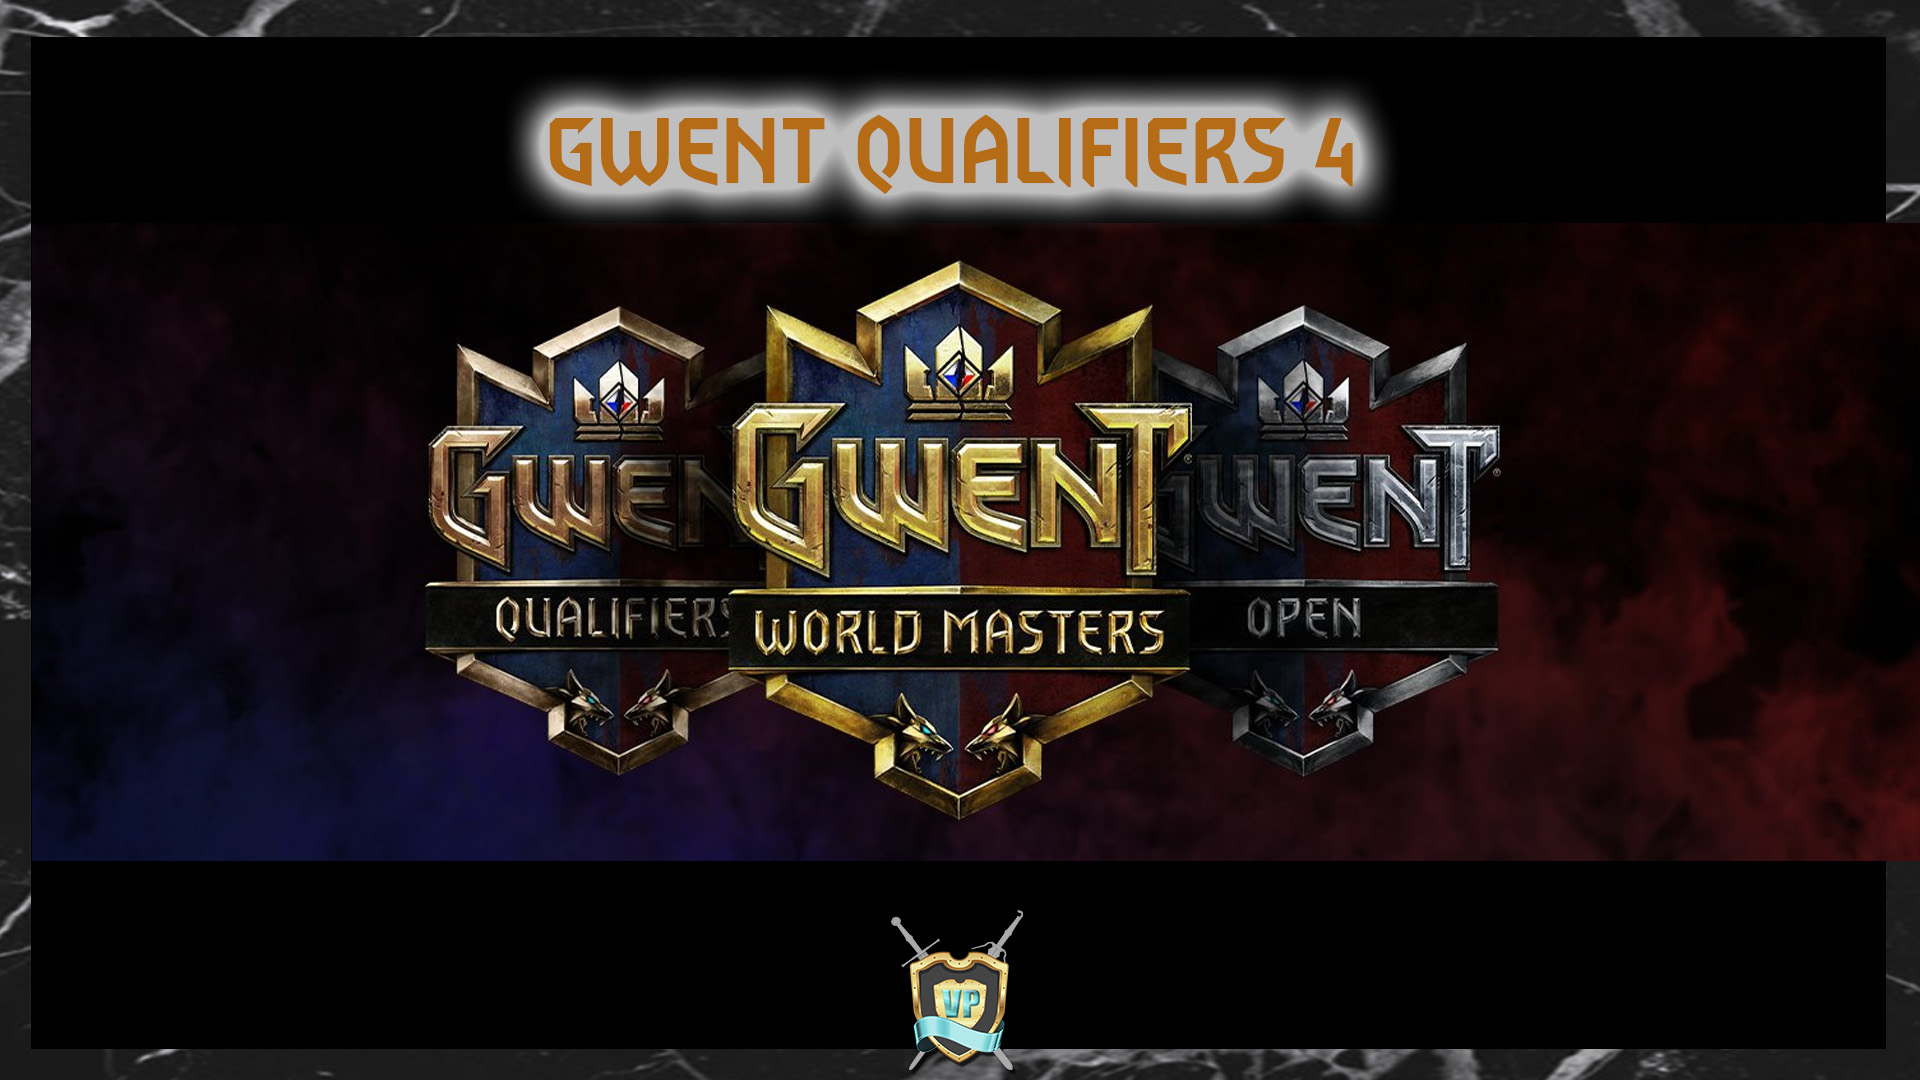 Gwent Qualifiers 4